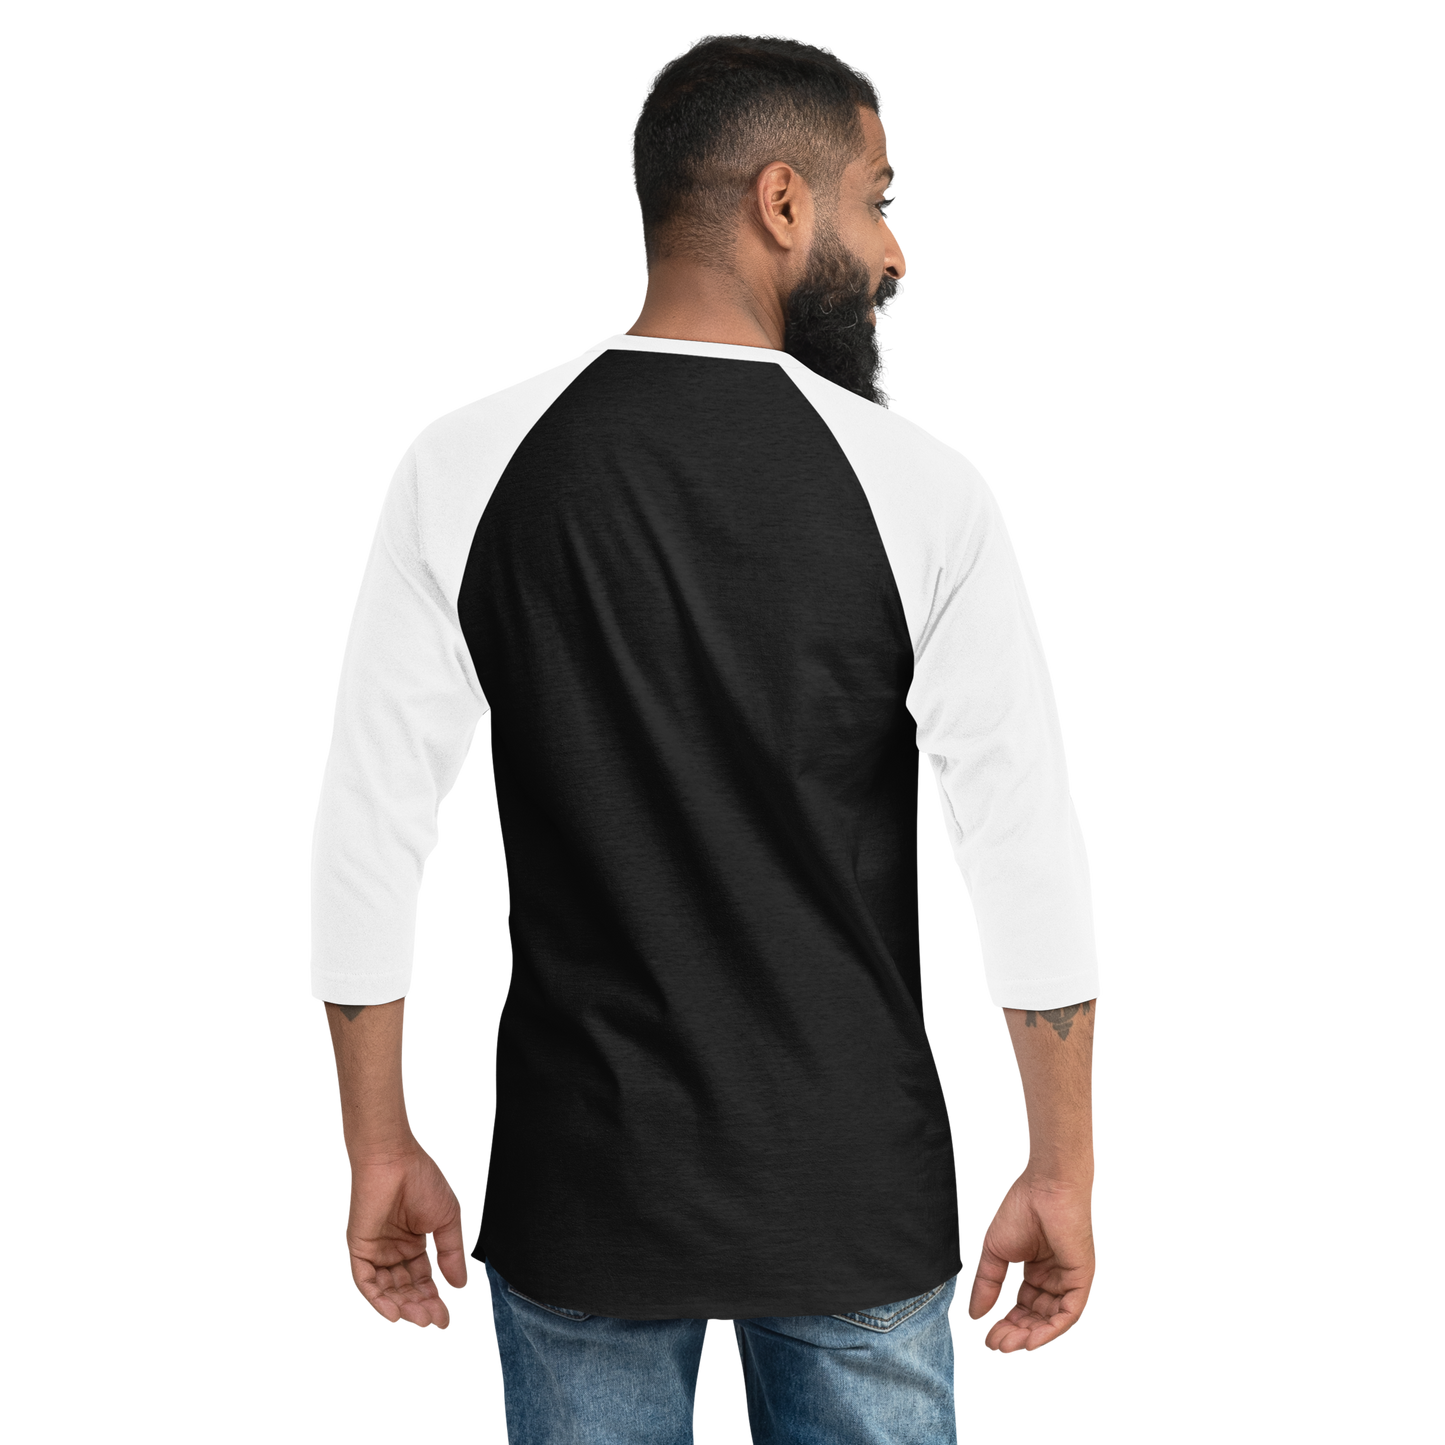 unisex 3/4 sleeve raglan shirt black and White back